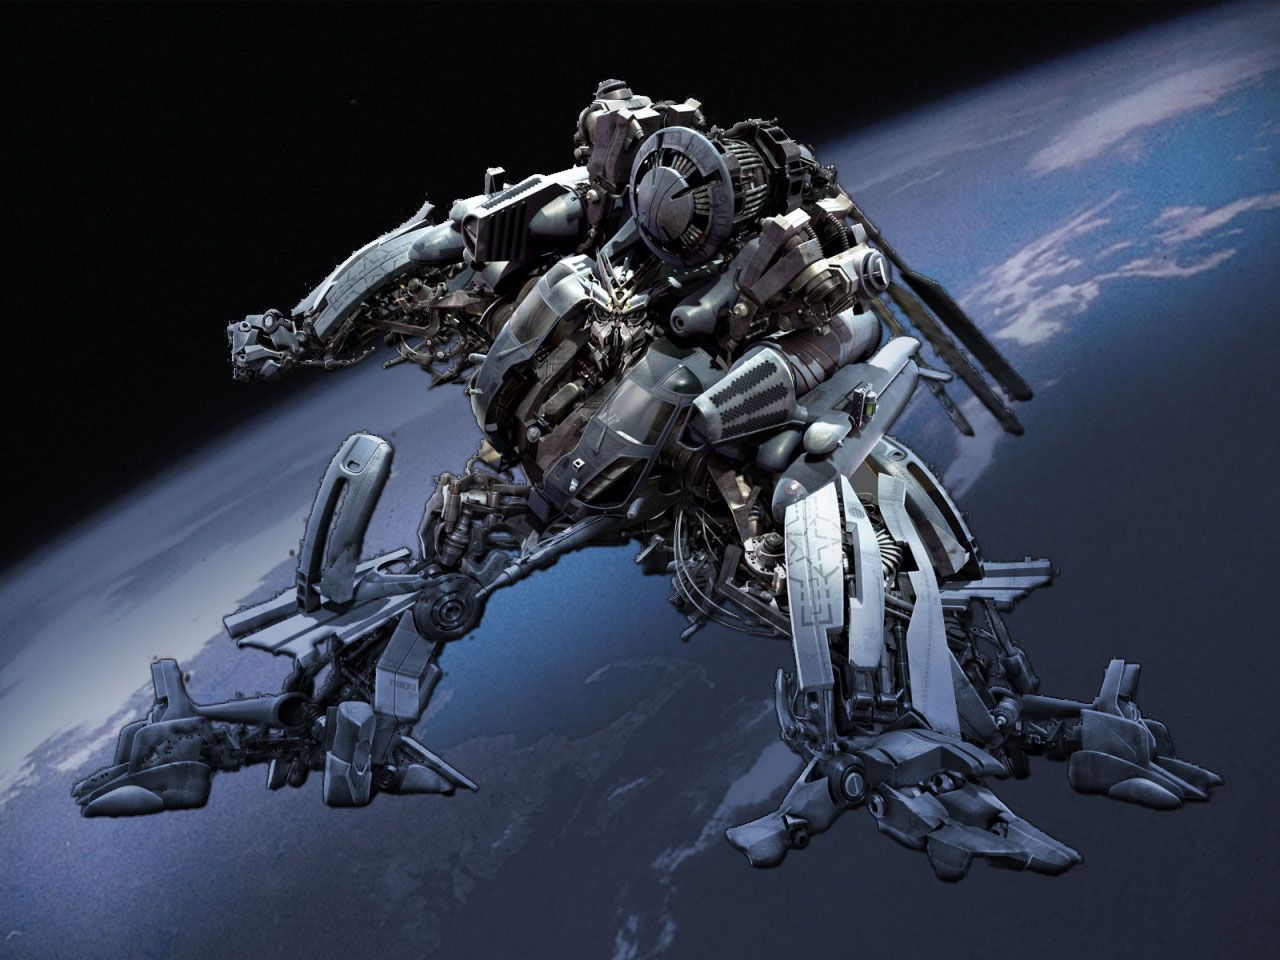 Transformers 2 Movie BlackOut, 1280 x 960pix wallpaper Science Fiction, 3D Digital Art